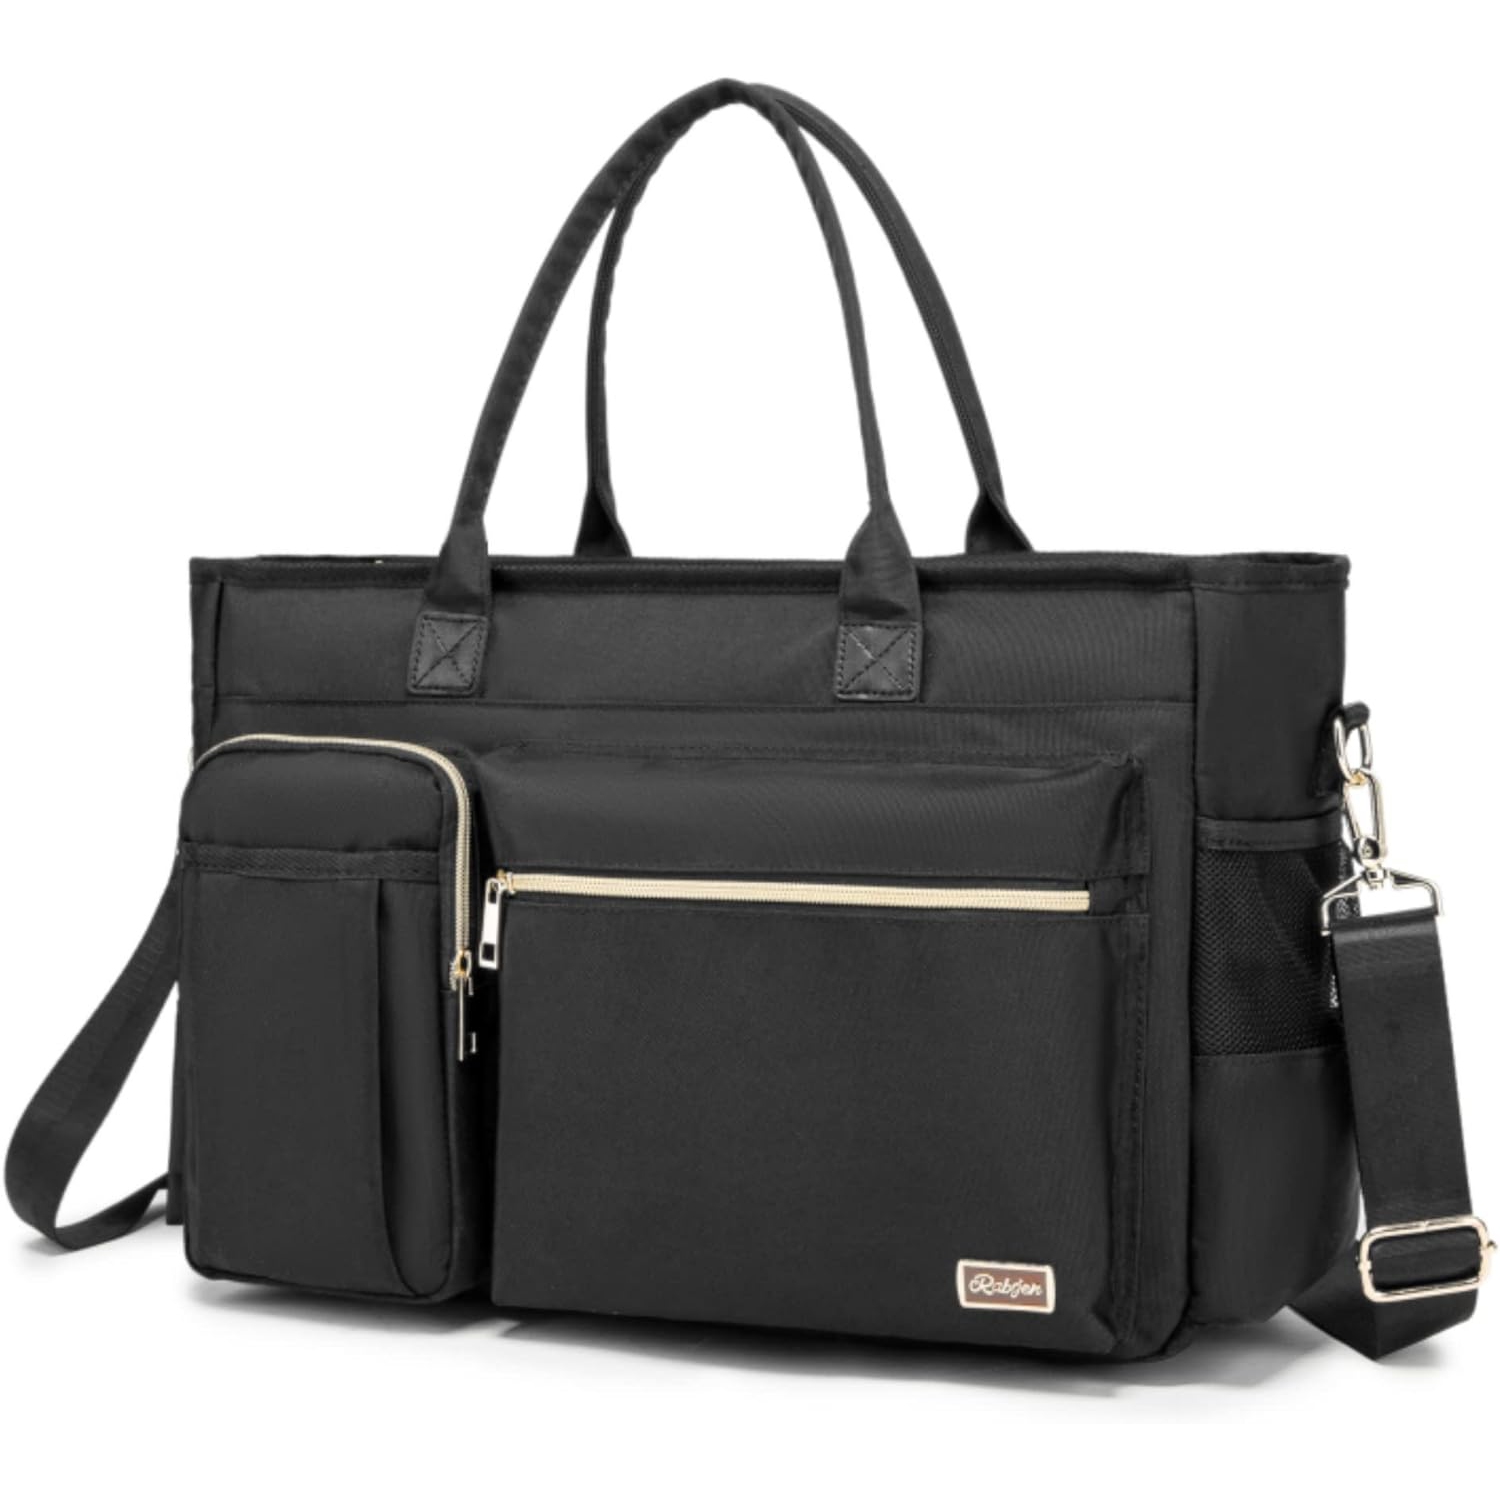 Nurse Tote Bag for Work with Padded 15.6” Laptop Sleeve, Medical Supplies Shoulder Bag for Home Health Care